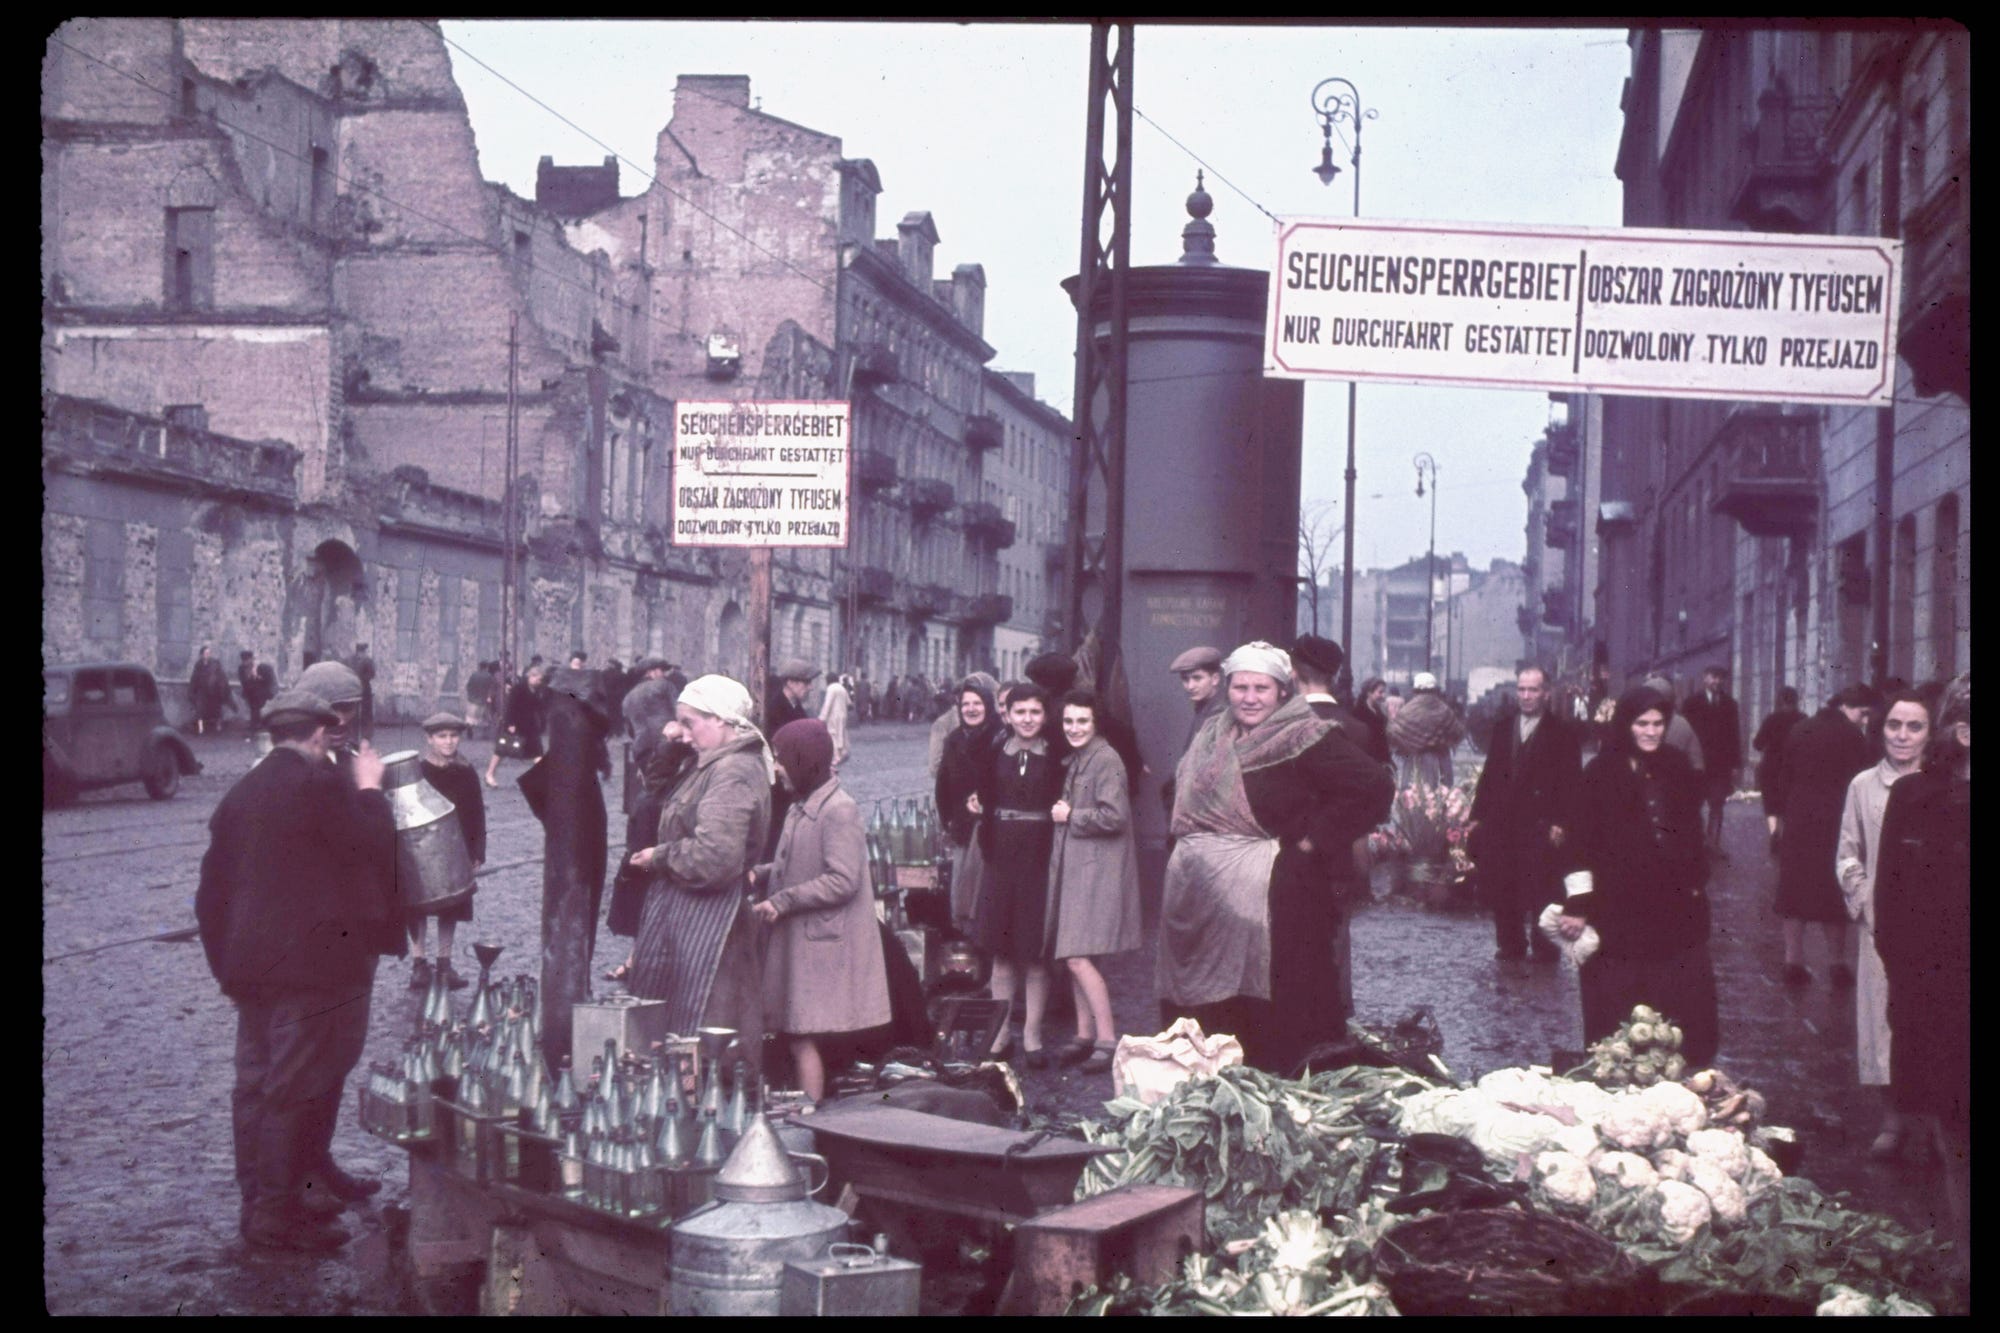 Nazi Germany Warsaw ghetto uprising